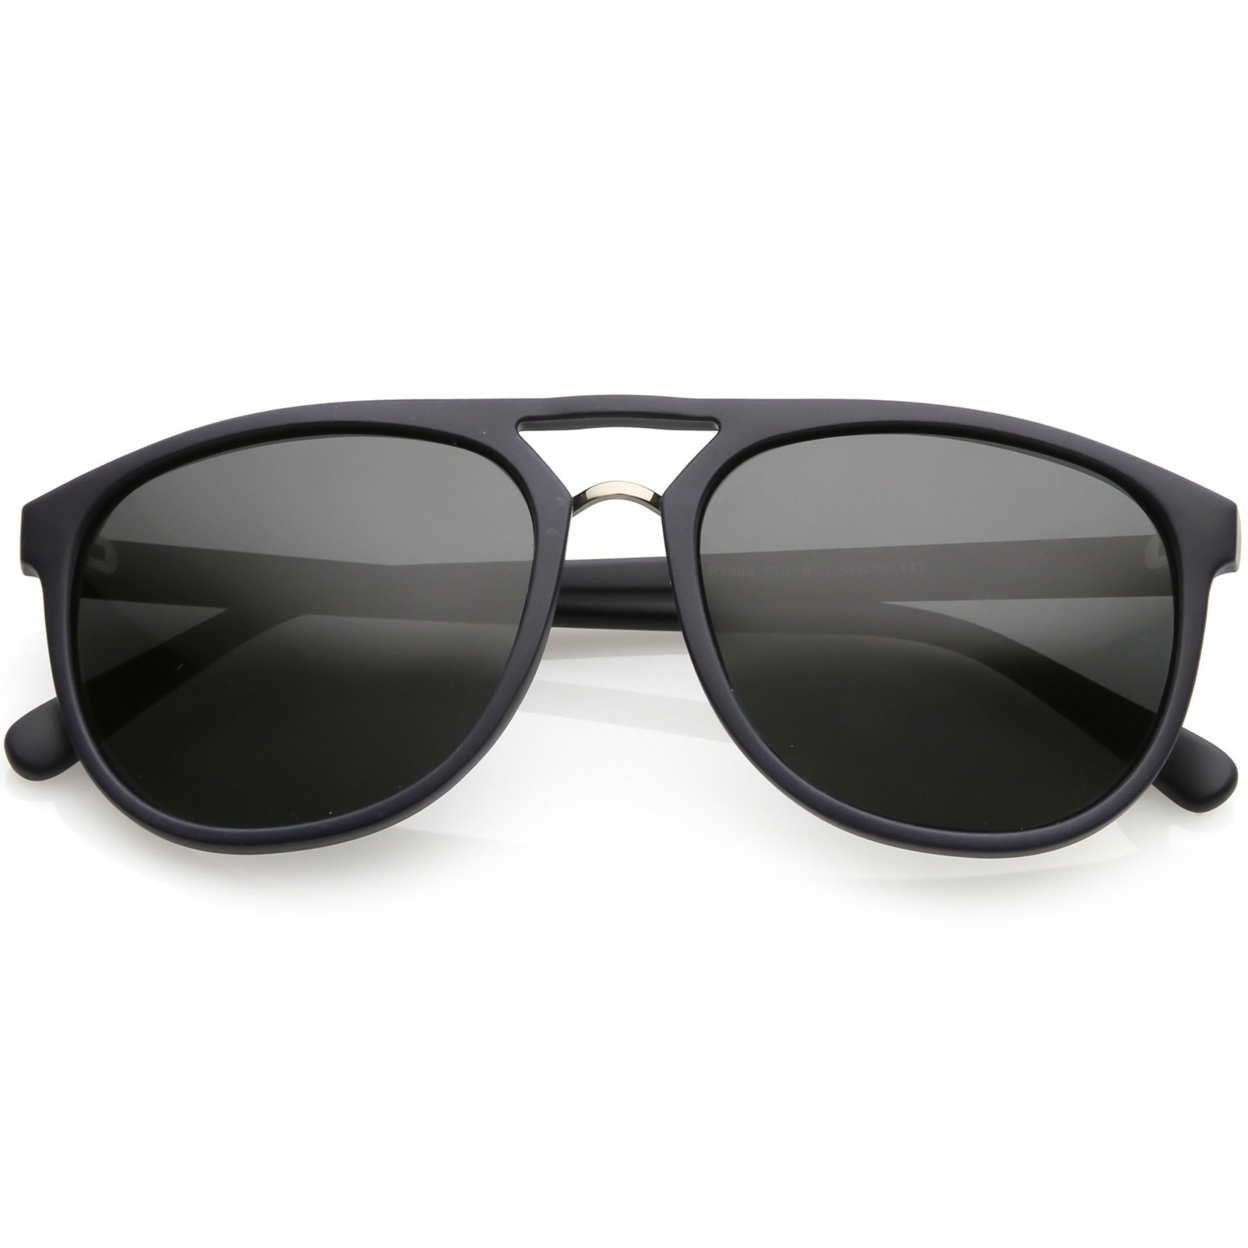 Premium Polarized Flat Top Aviator Sunglasses Metal Nose Bridge Round Lens 55mm - Matte Grey / Green